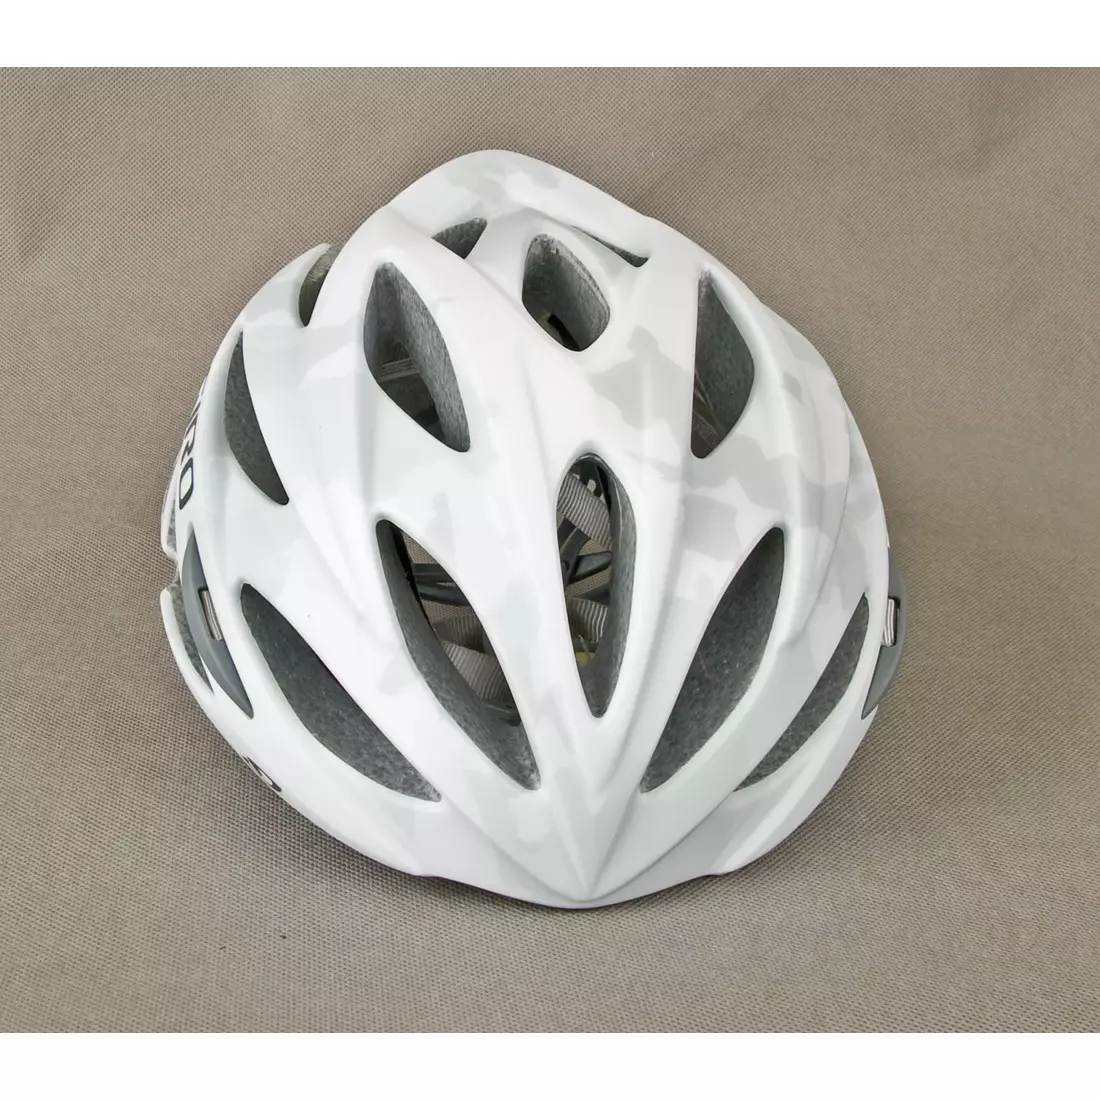 GIRO women's bicycle helmet SONNET white